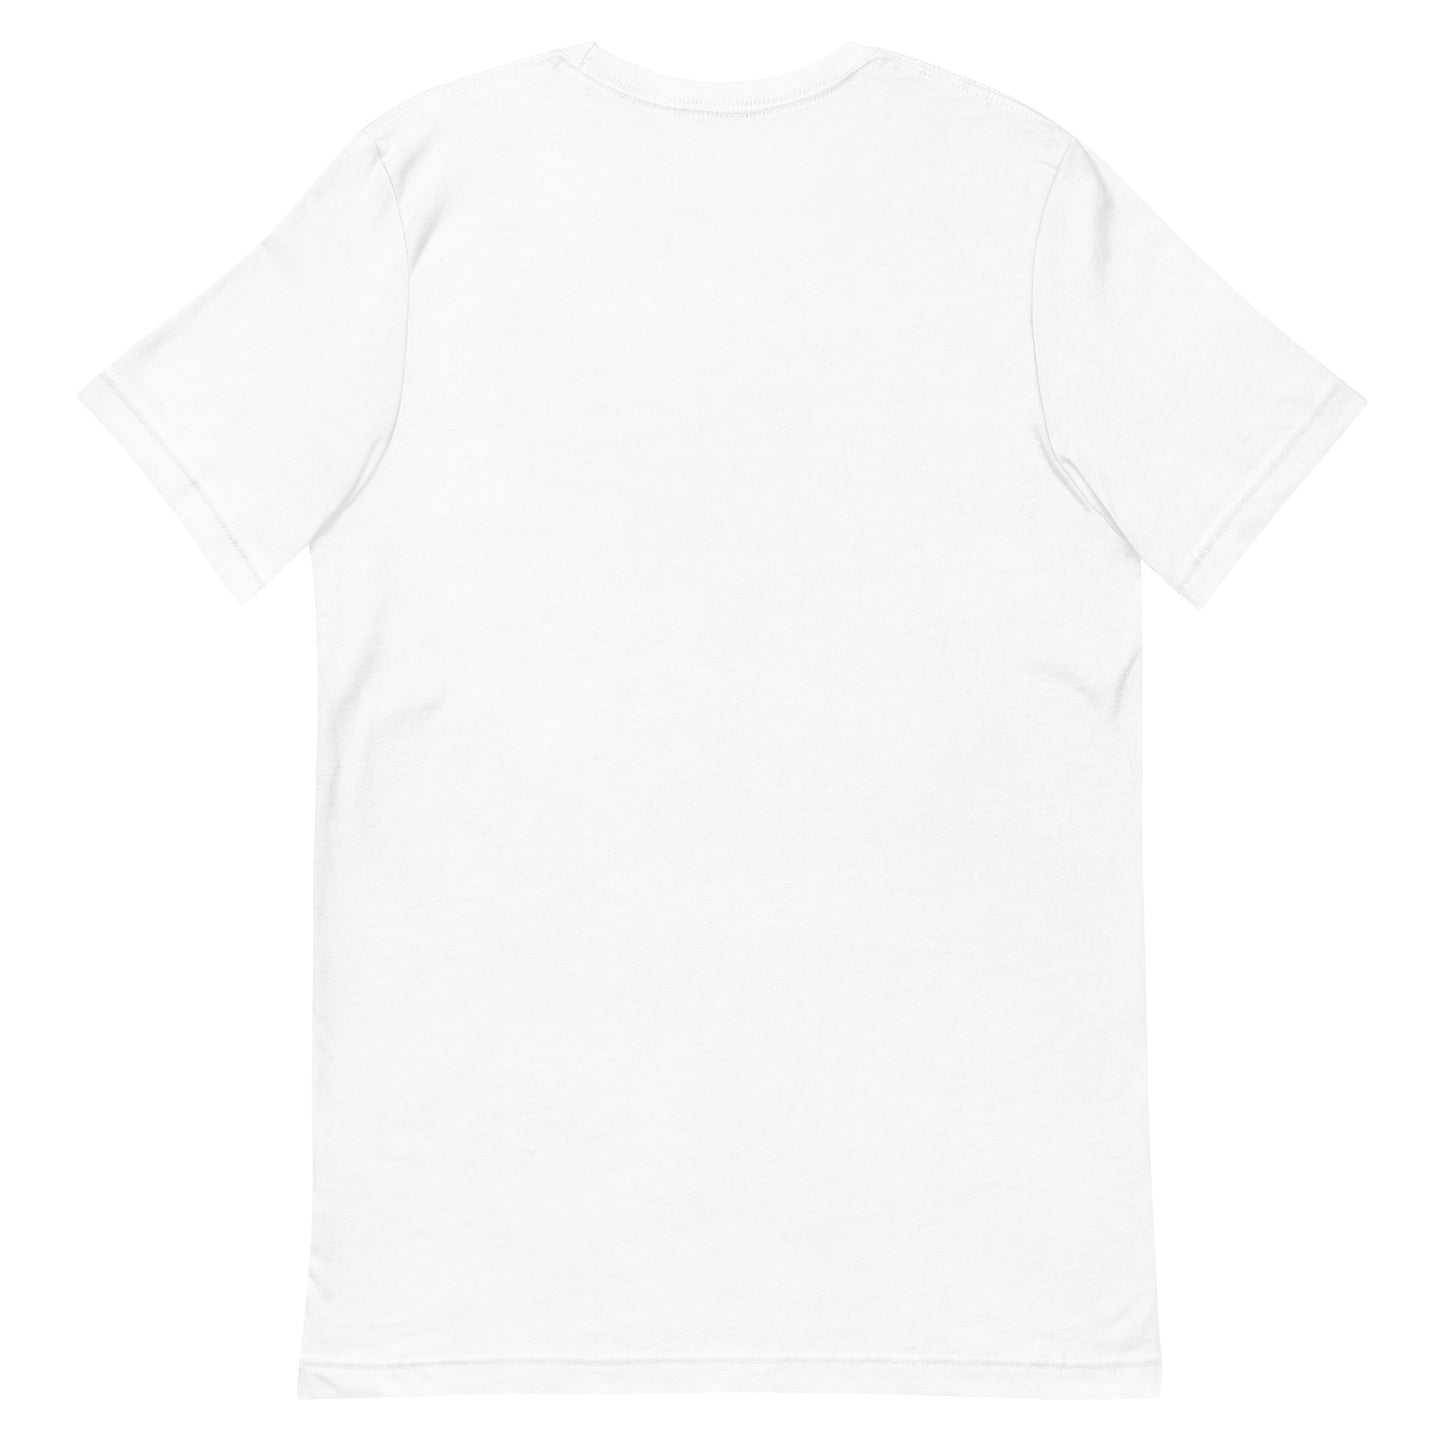 Unisex t-shirt "42 YOSEKAKE" White